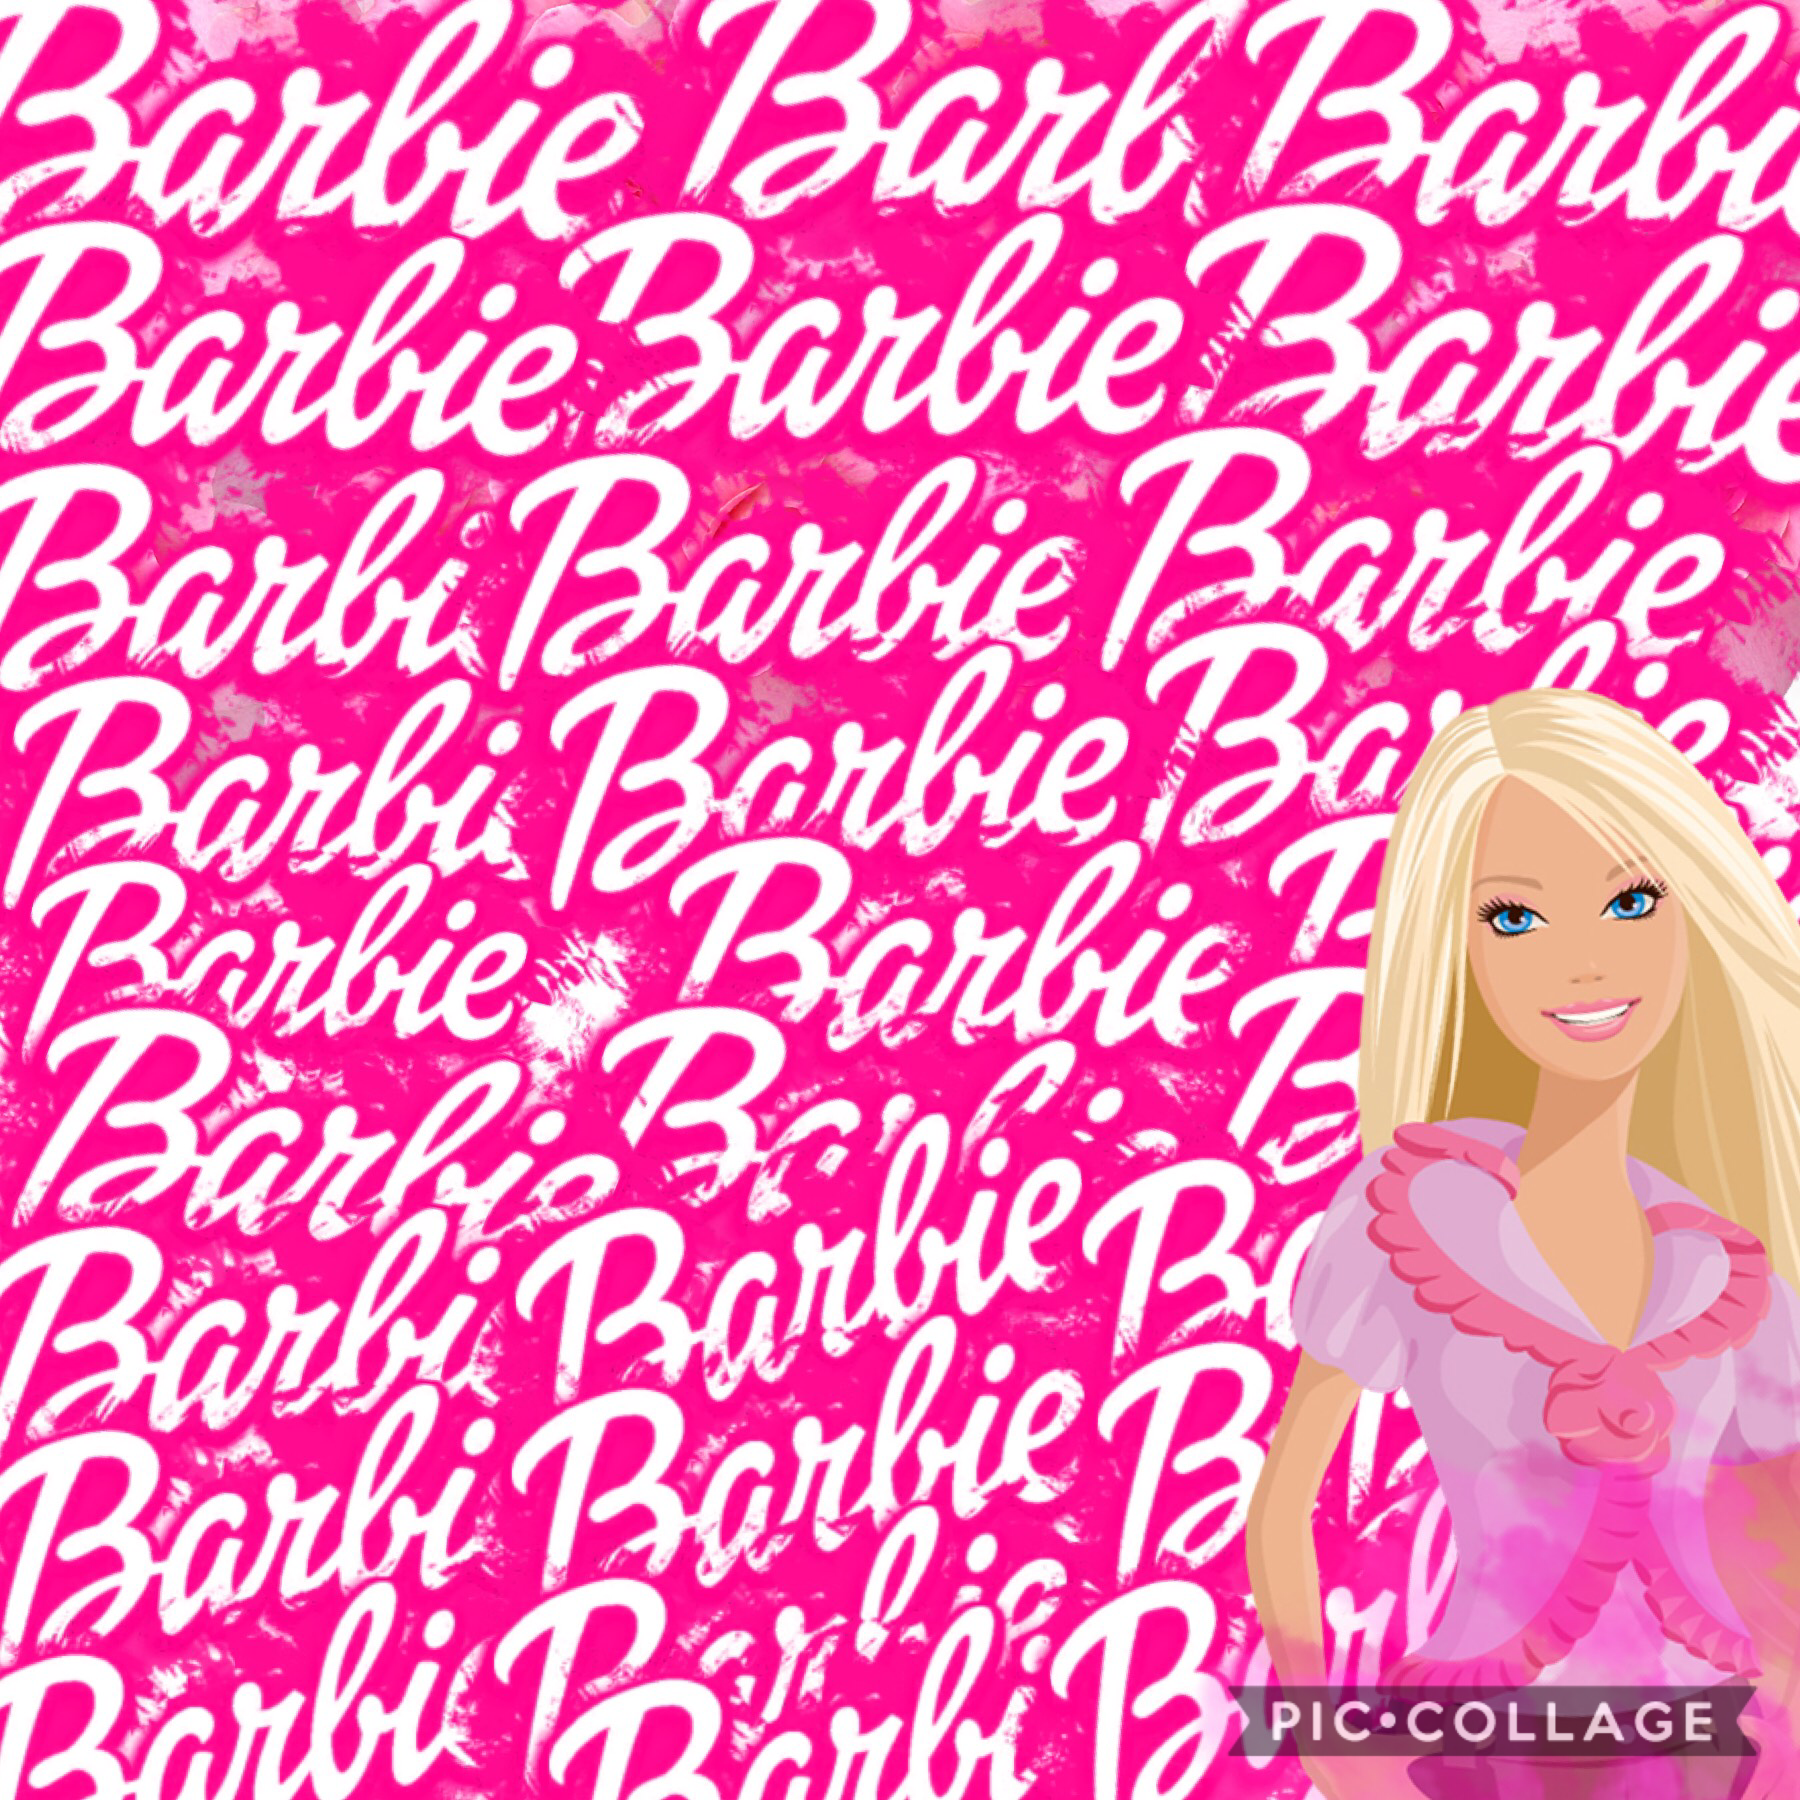 Barbie Collage! Like it?